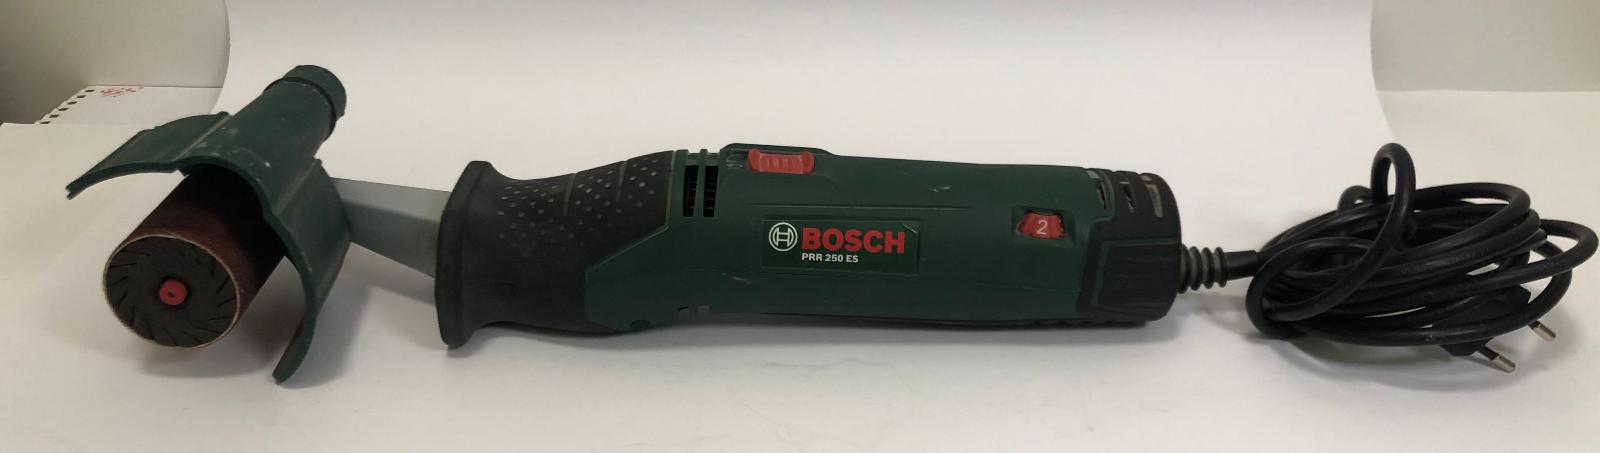 Multifunkčná brúska Bosch PRR 250 ES - Náradie